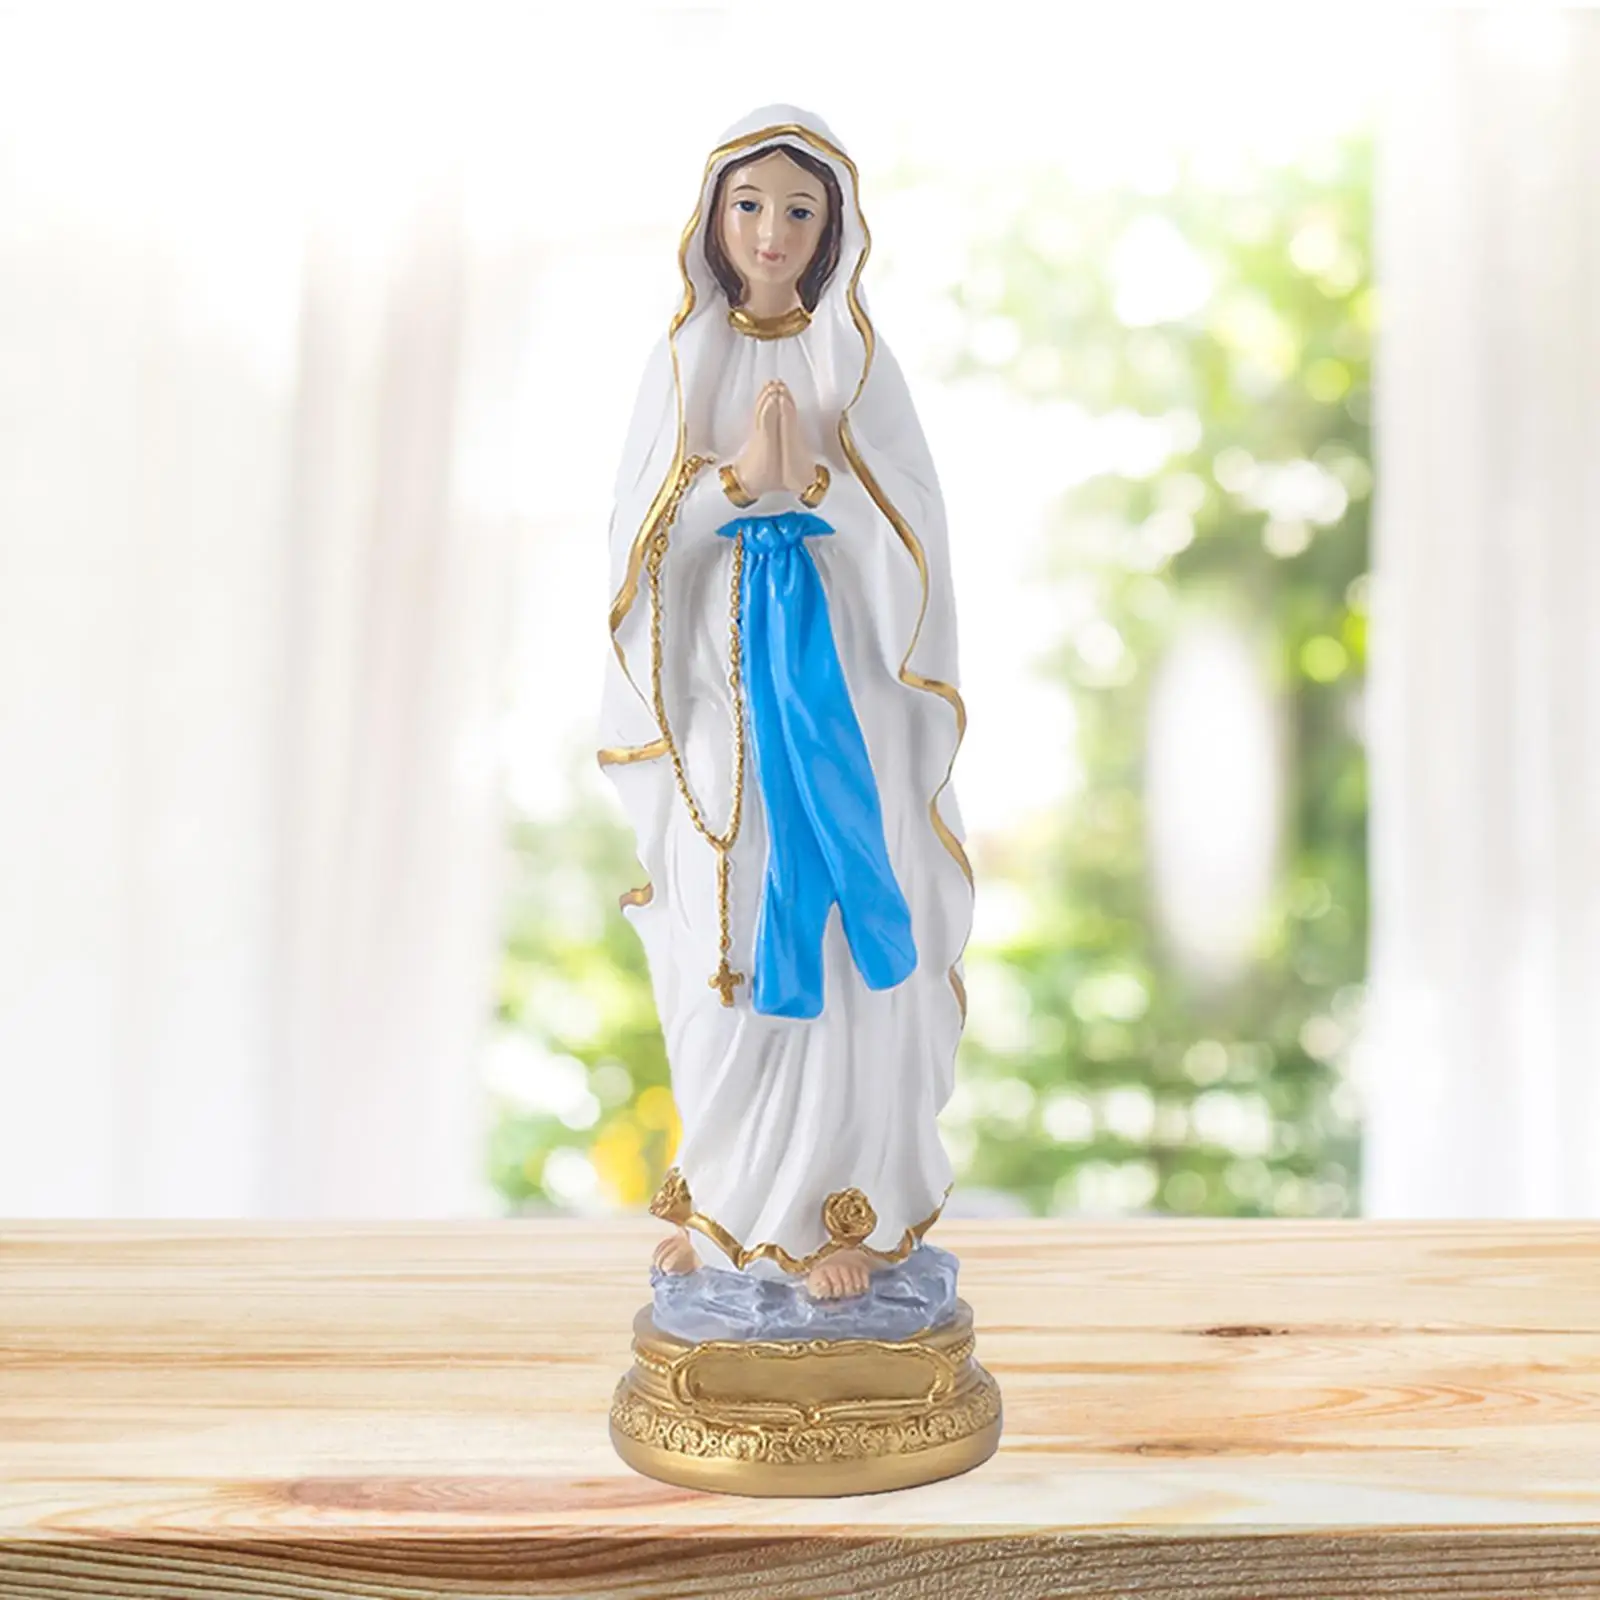 Resin Madonna Virgin Mary Statue Figurine Wedding Gift Xmas Home Tabletop Decorative